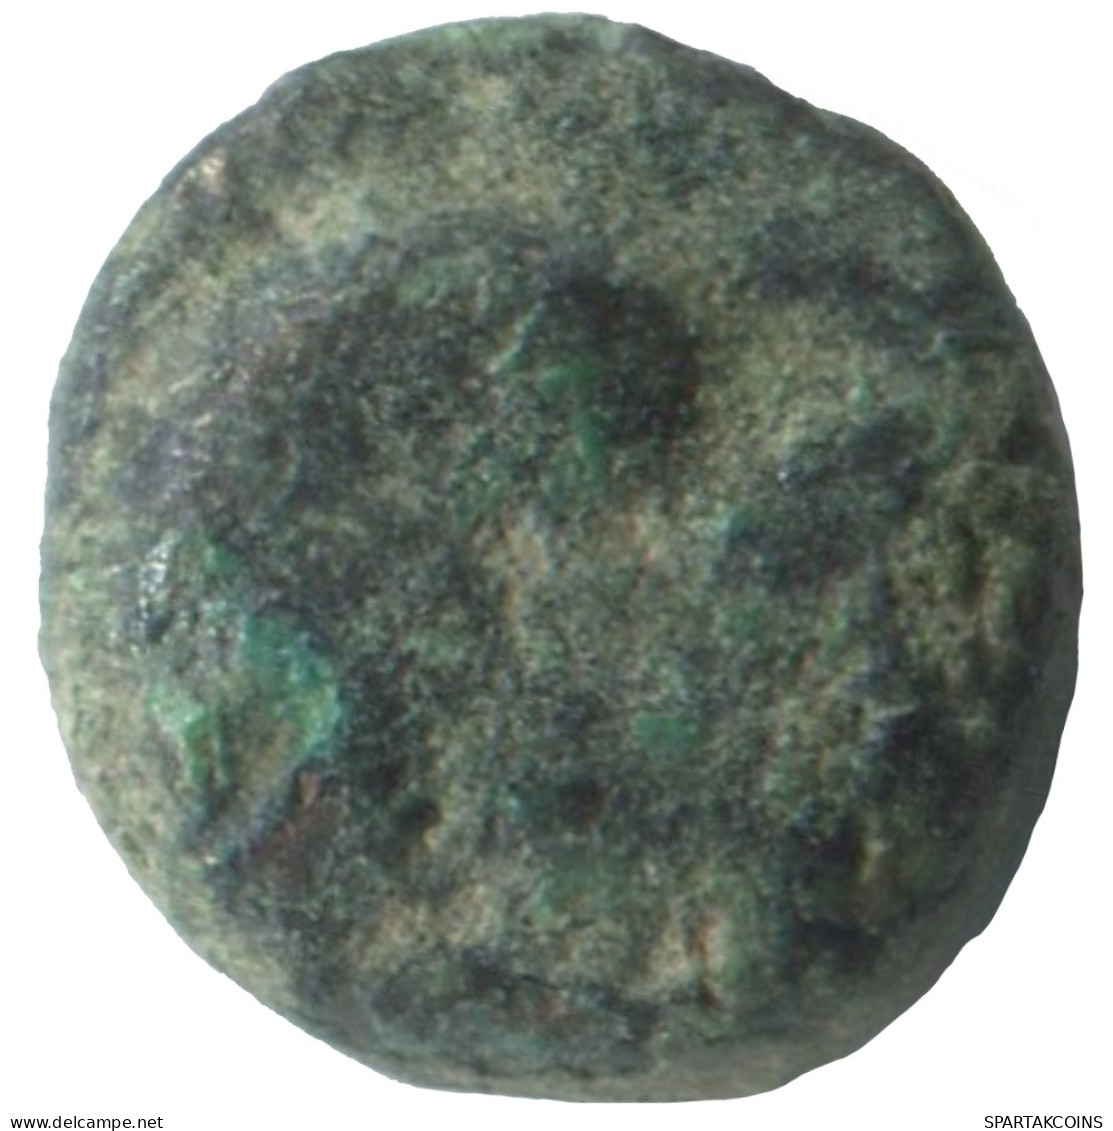 WREATH Ancient Authentic GREEK Coin 0.7g/8mm #SAV1259.11.U.A - Griekenland